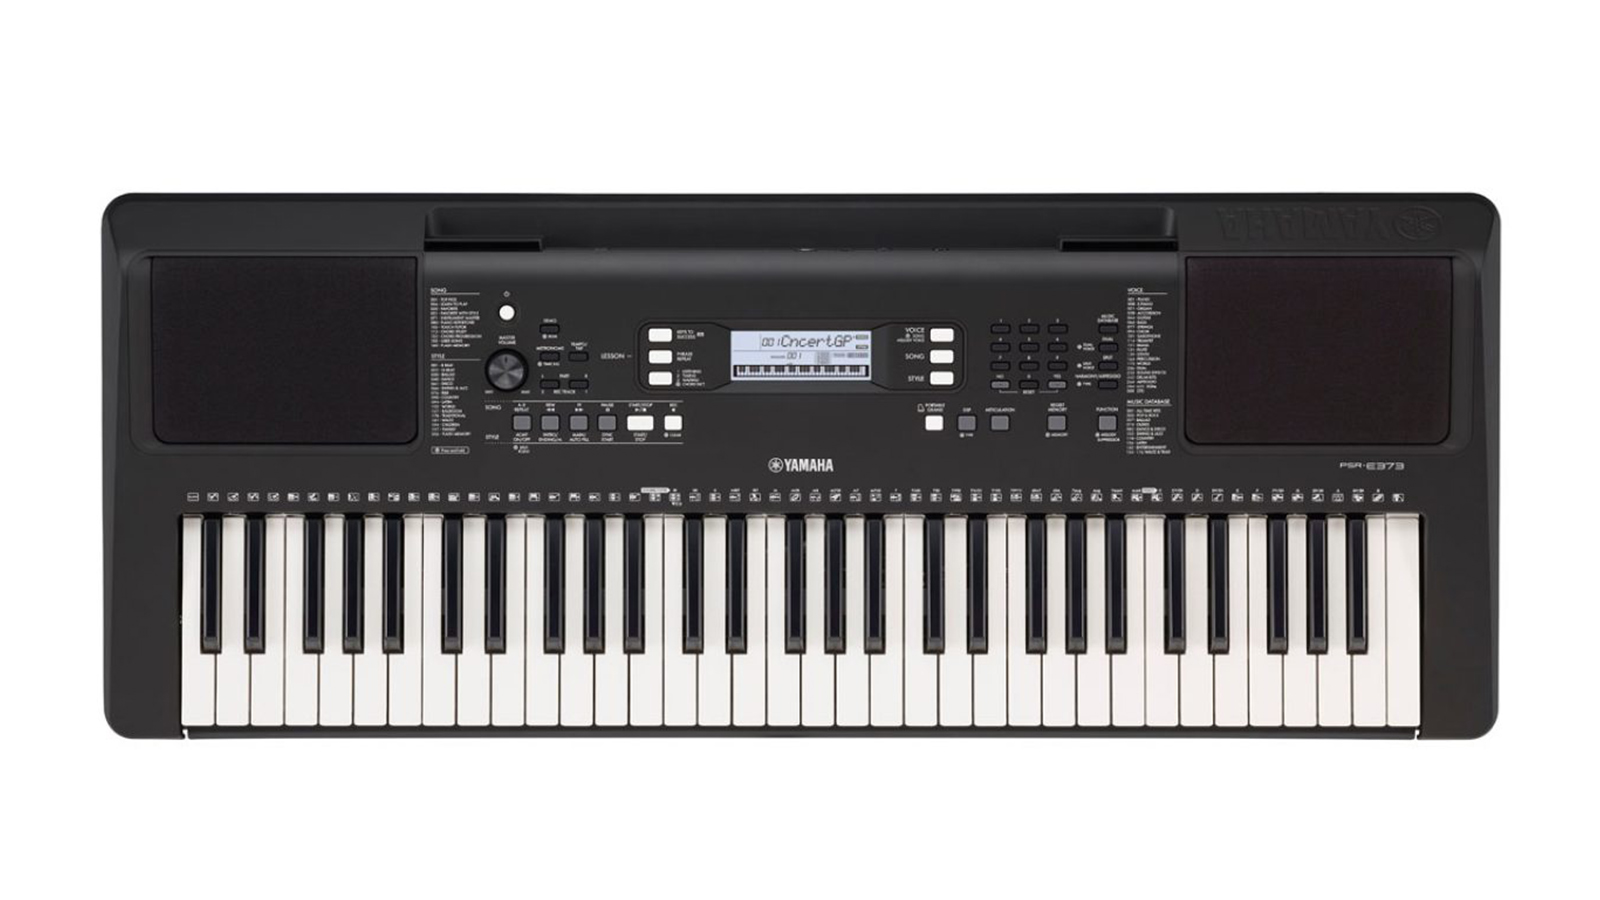 Yamaha PSR-E373 keyboard review | MusicRadar